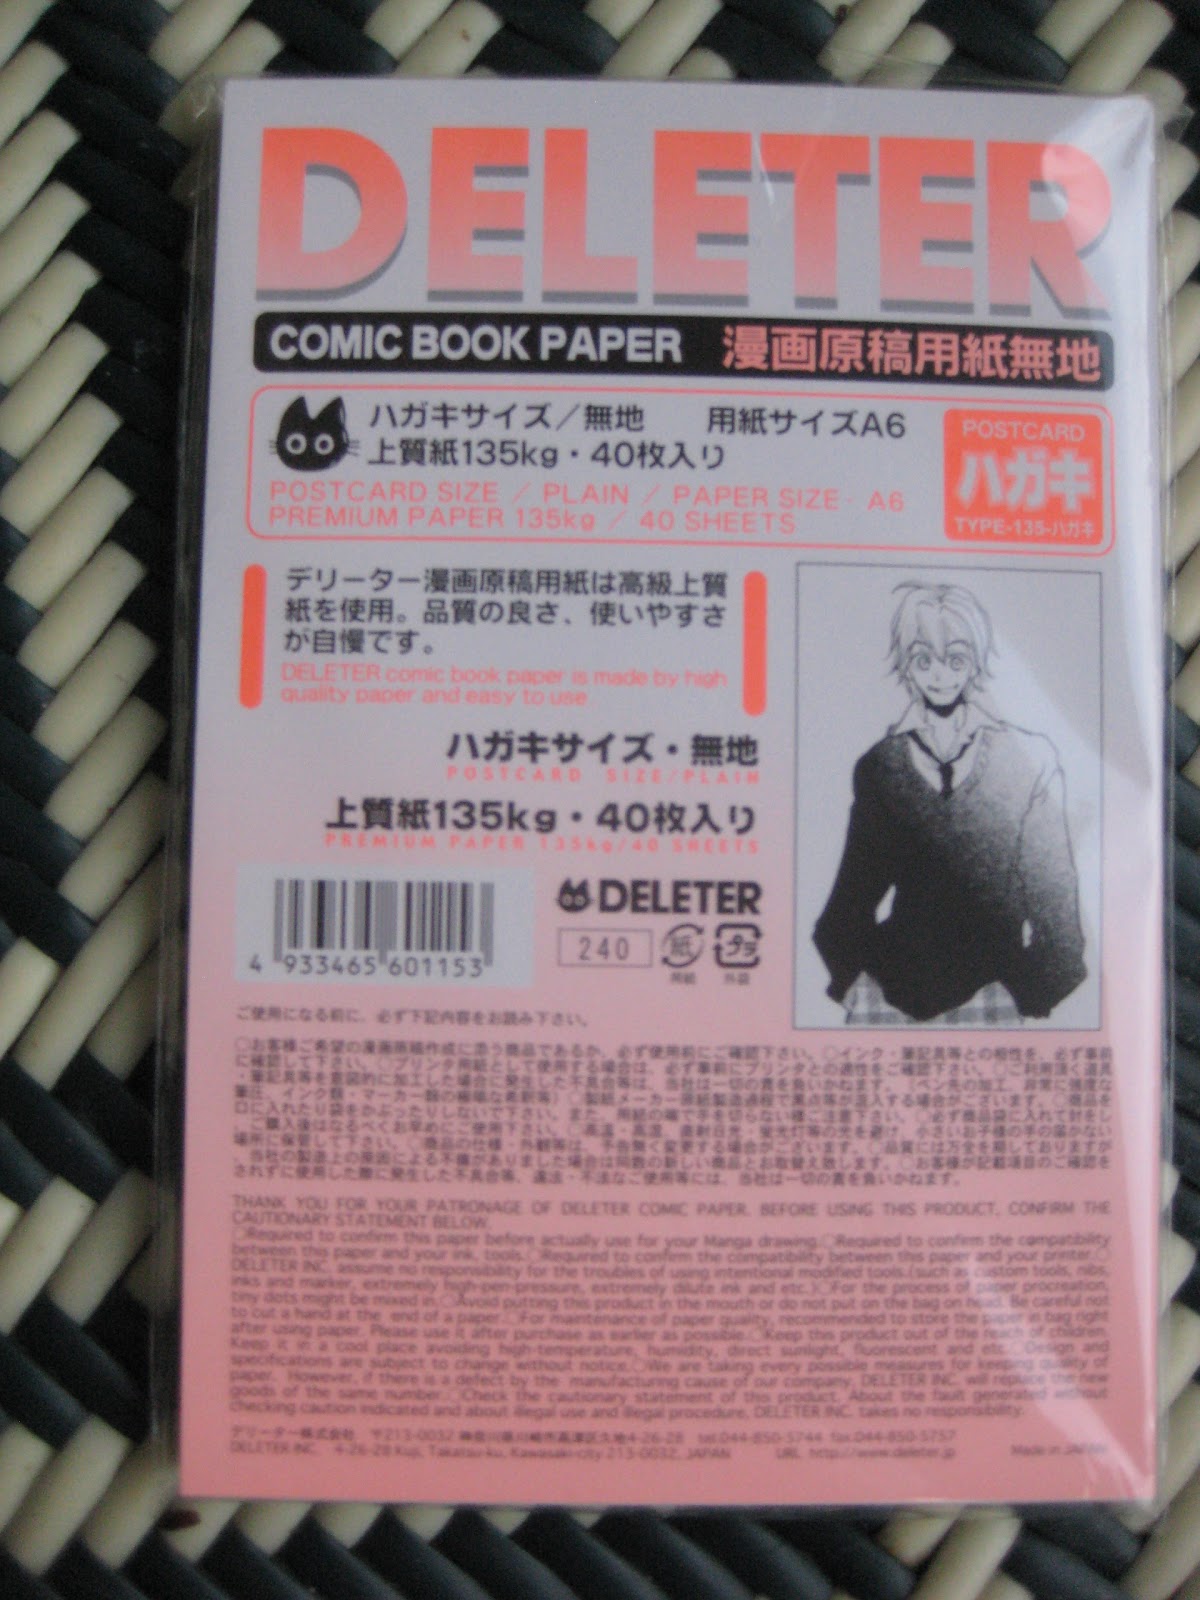 Manga Paper Test Deleter Comic Book Paper And Maxon St Pc